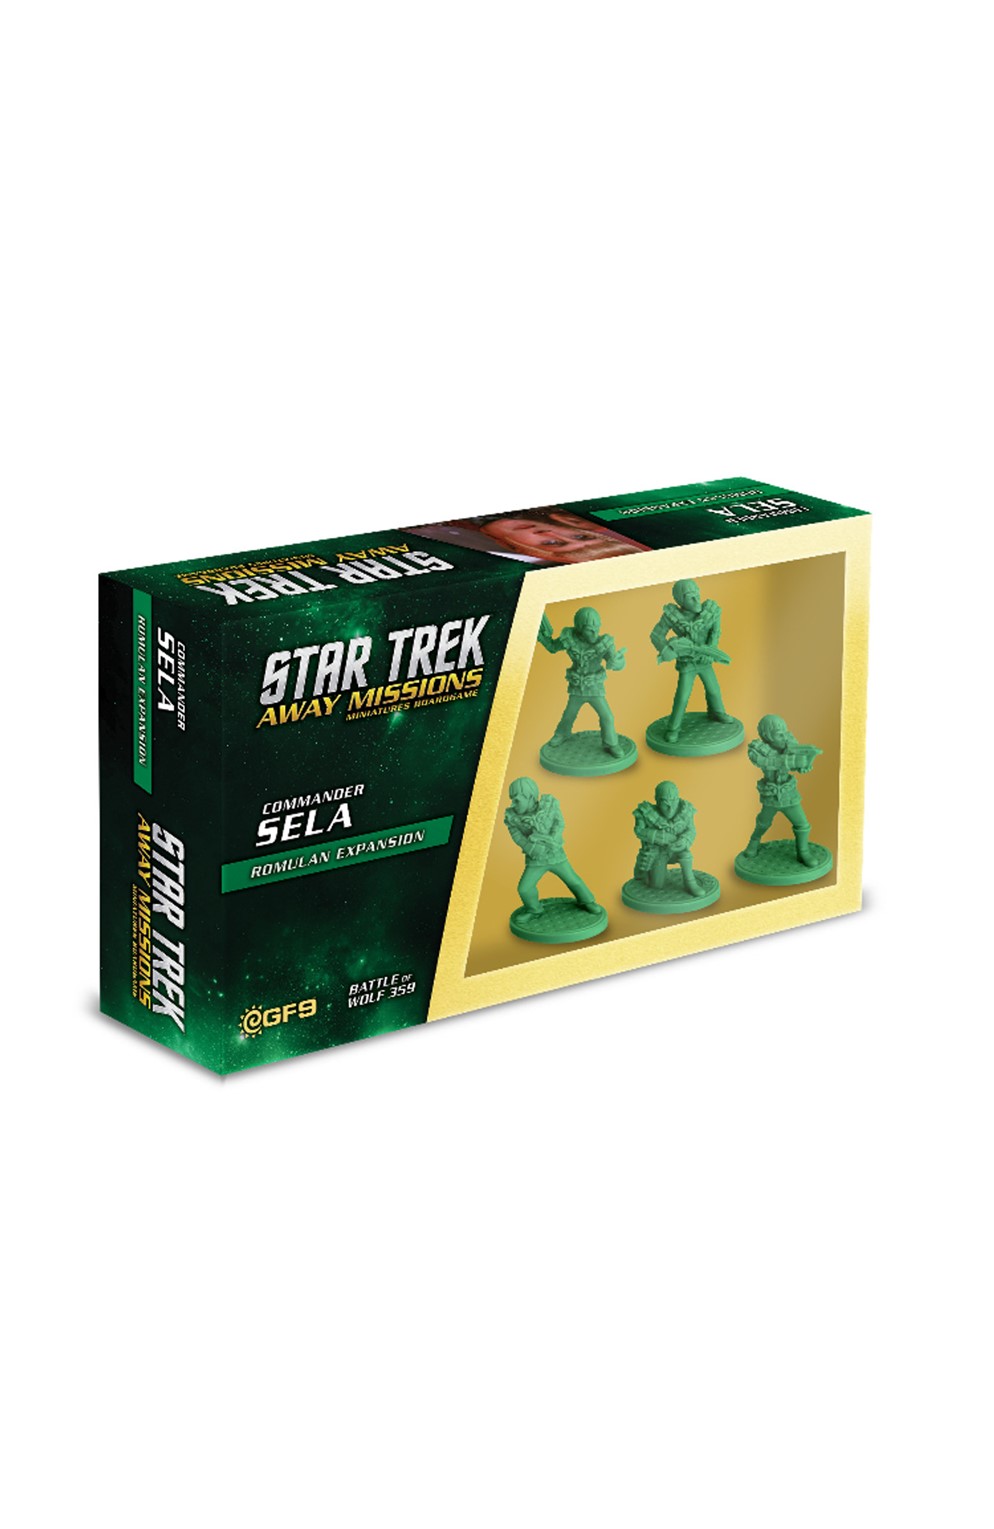 Star Trek Away Missions: Romulan - Commander Sela Expansion